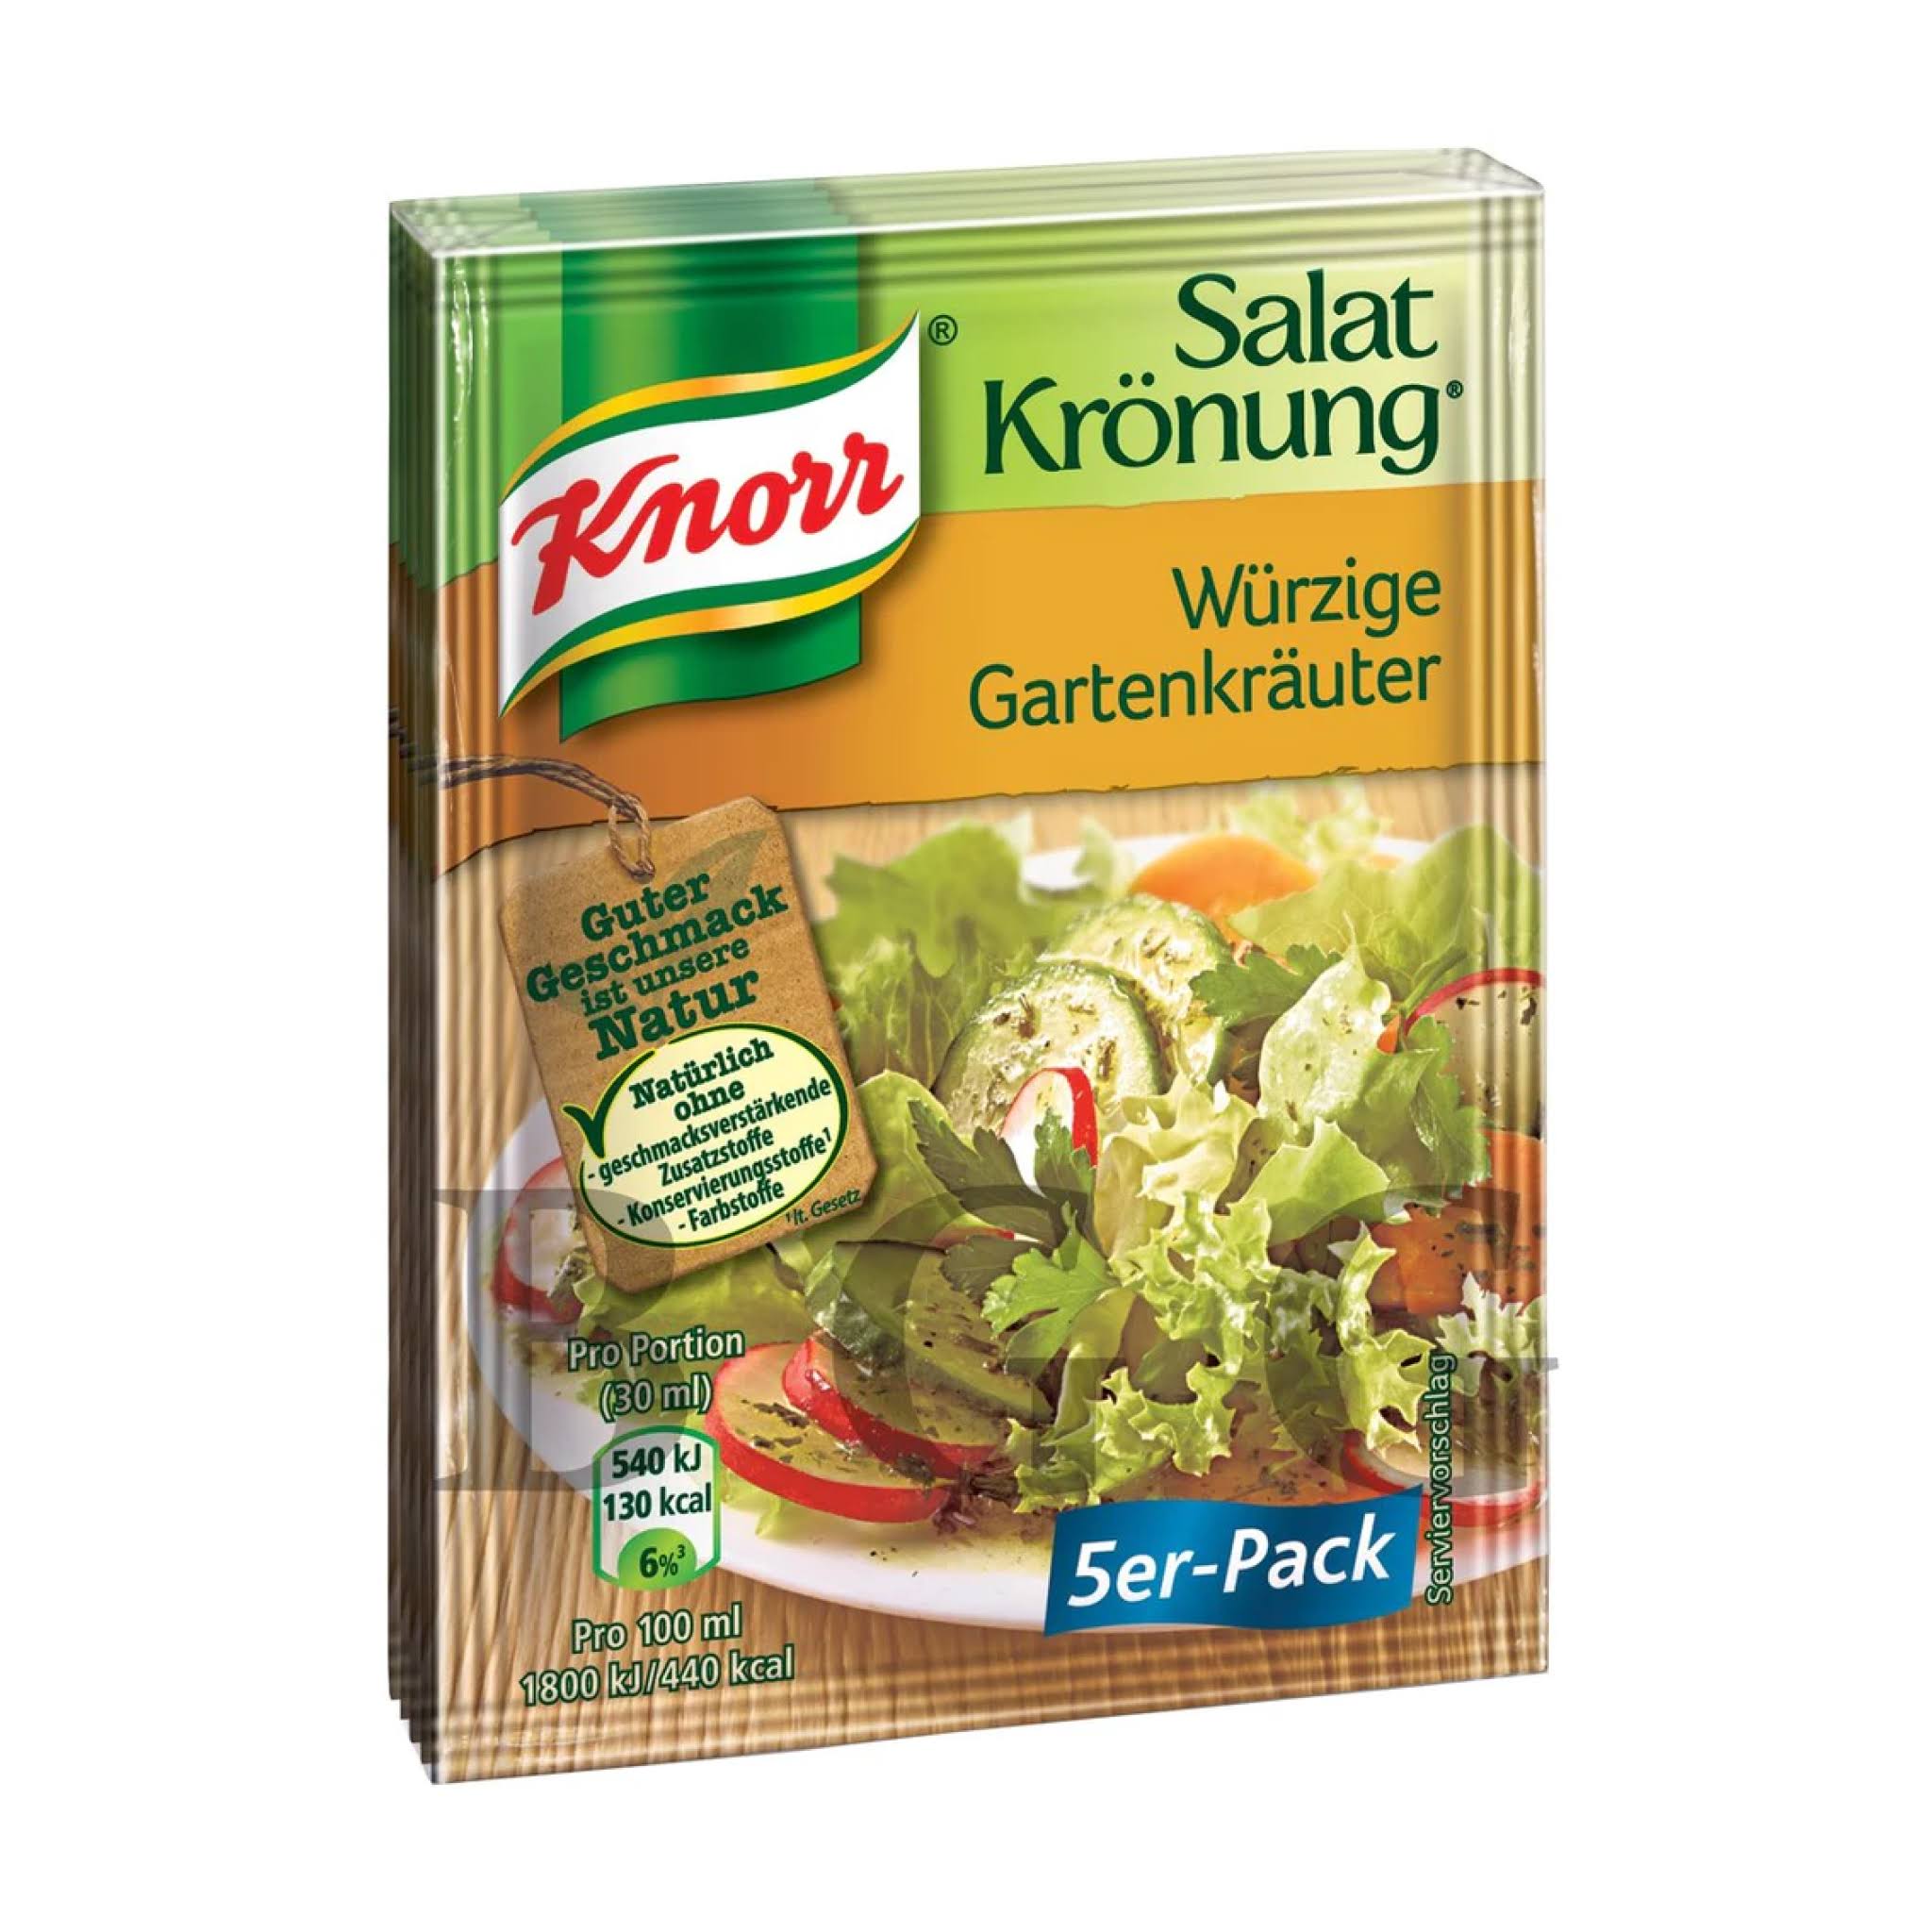 Knorr Salat Krönung Salad Dressing Mix - Garden Herbs German, 5pk